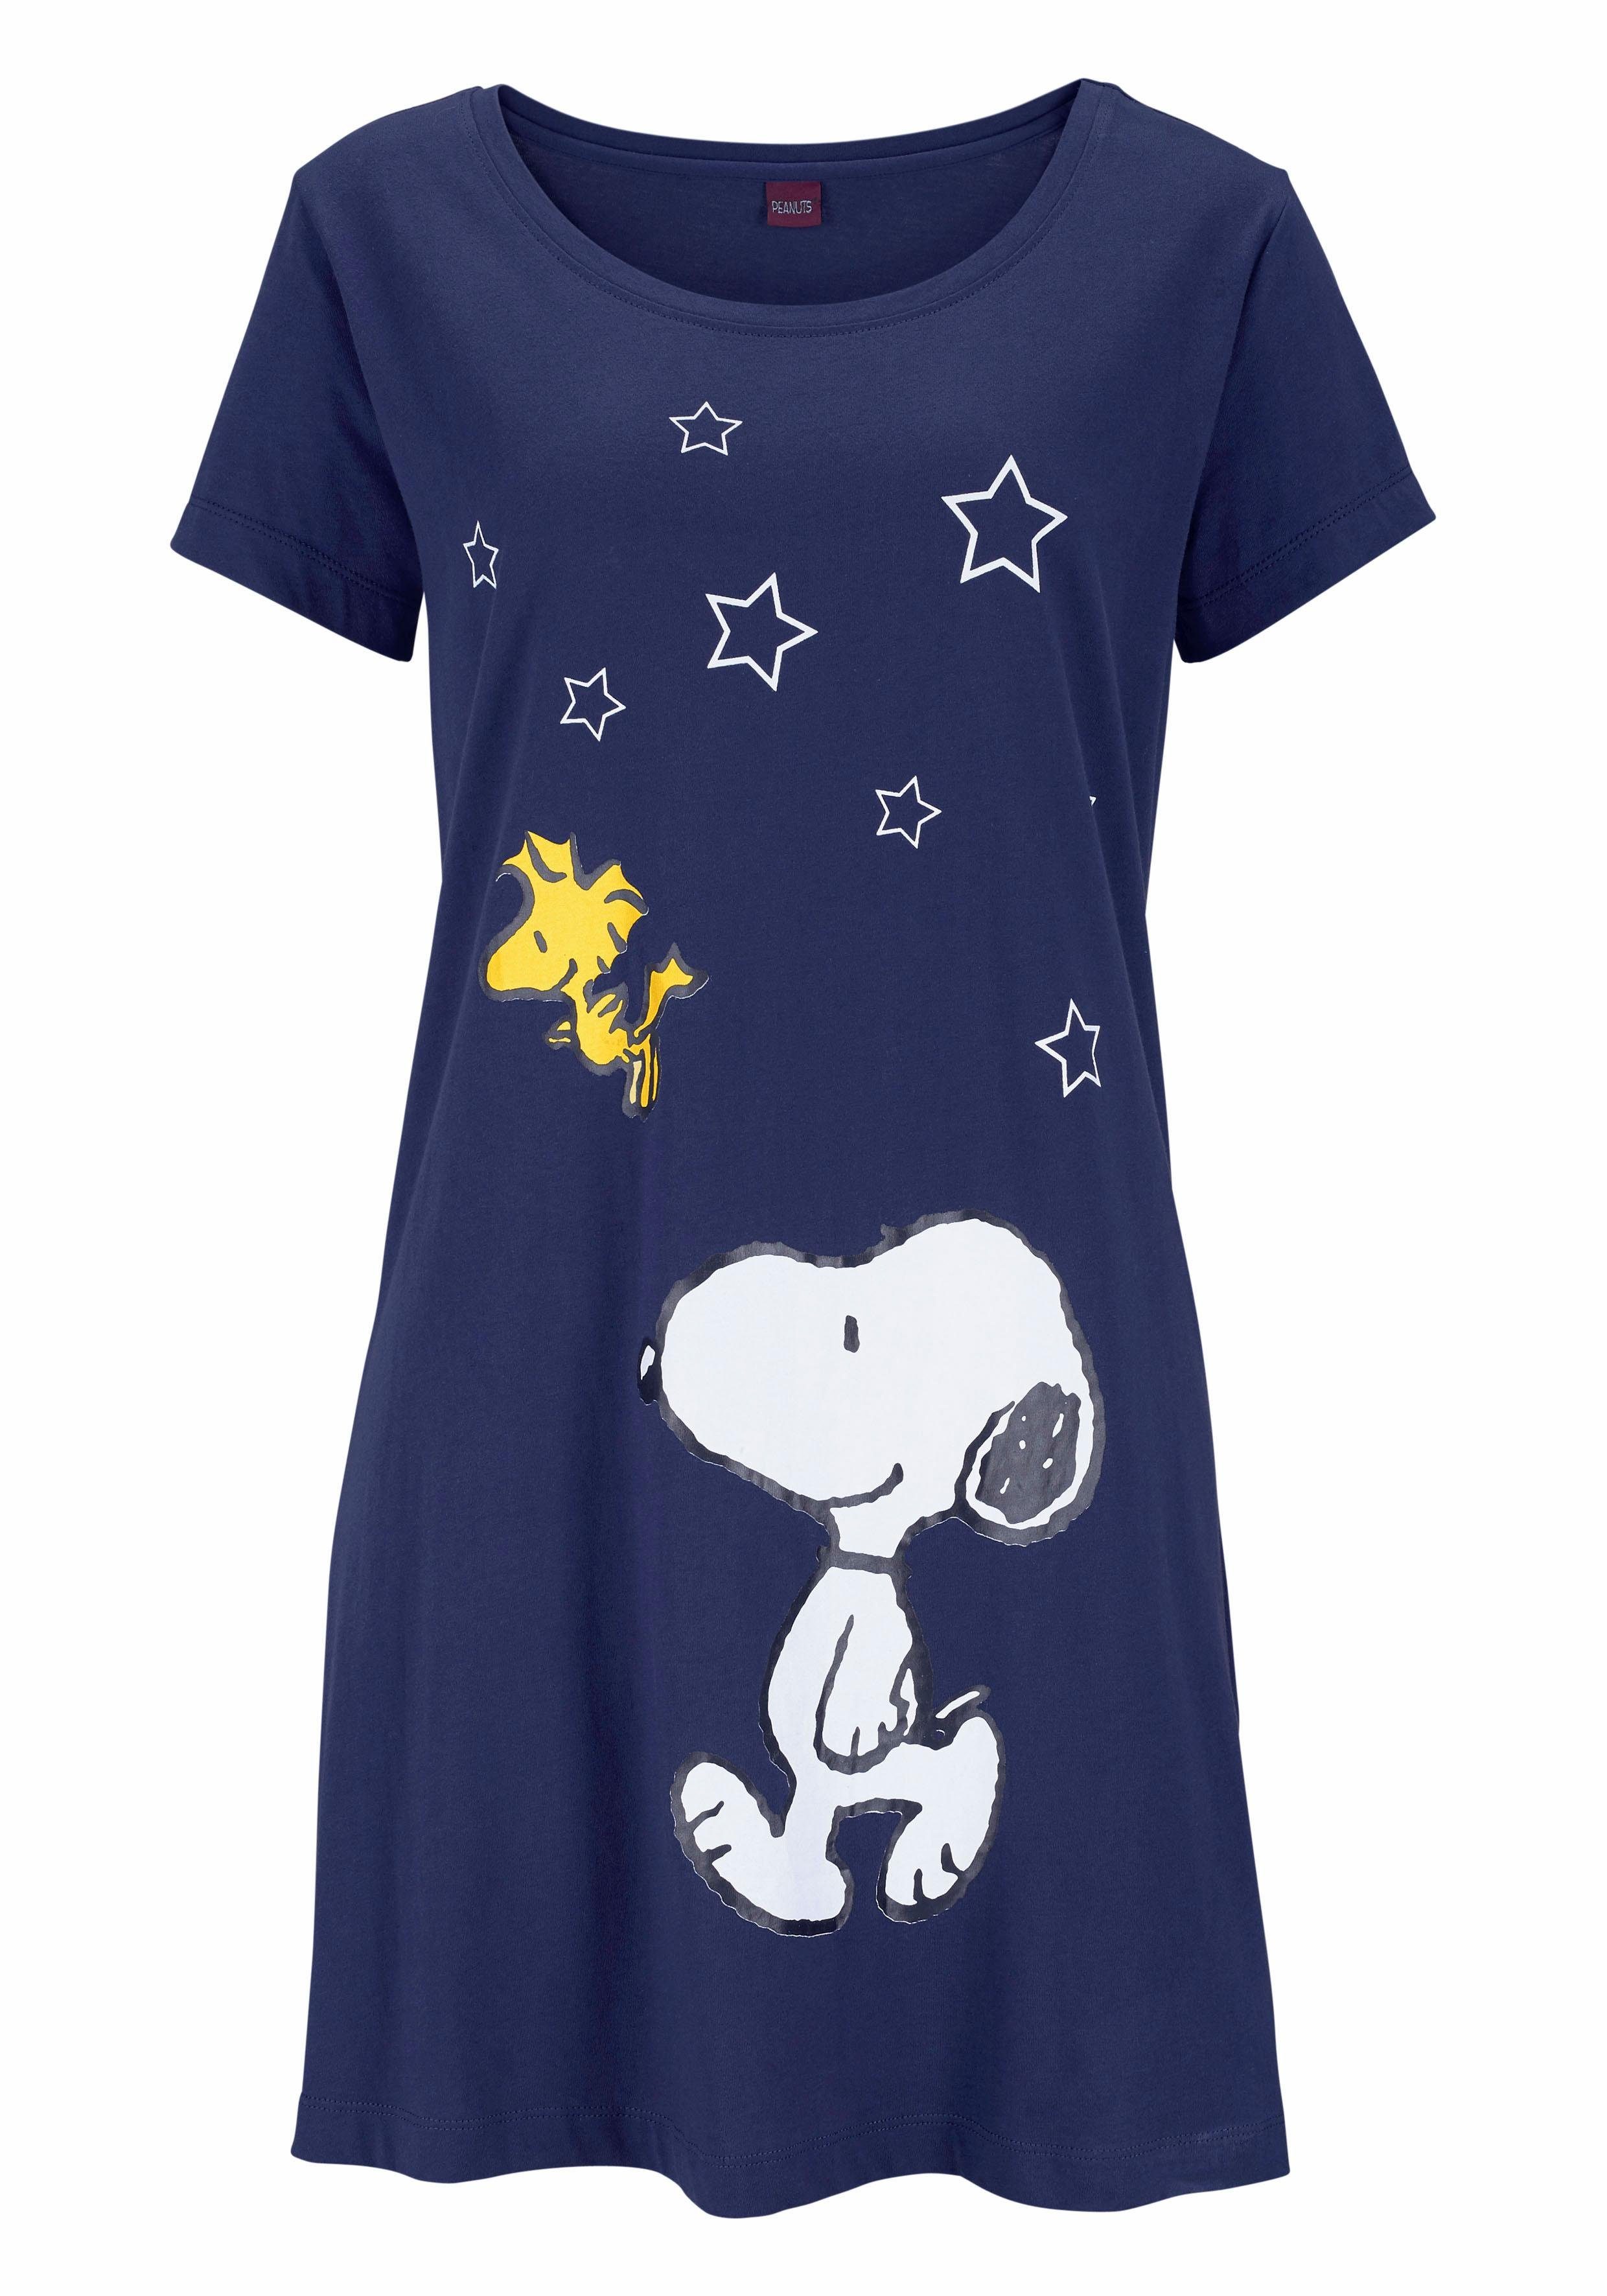 Minilänge mit marine Snoopy-Print PEANUTS in Sleepshirt